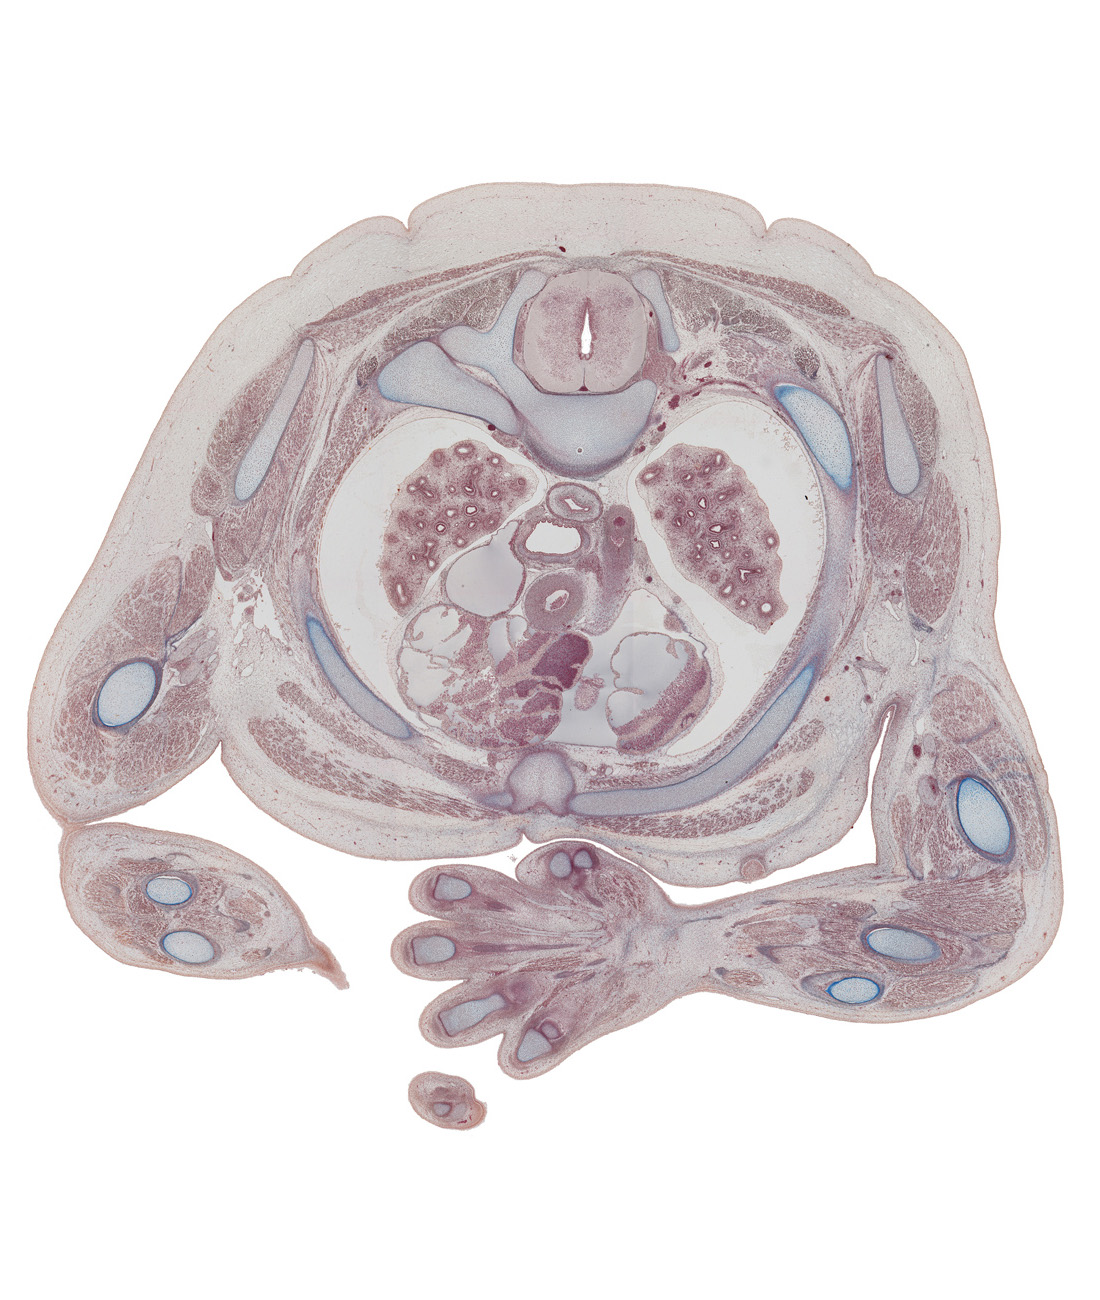 T-3 spinal ganglion, arch of azygos vein, ascending aorta, body of sternum, brachial artery, descending aorta, humerus, left atrium, left vagus nerve (CN X), mammary gland, neural arch of T-3 vertebra, pectoralis major muscle, pectoralis minor muscle, pleural cavity, posterior intercostal artery, proximal phalynx of digit 4 (ring finger), radius, rib 3, rib 3 (costal cartilage), right atrium, subcutaneous tissue, superior vena cava, surface ectoderm, transverse process of T-3 vertebra, ulna, upper lobe of left lung